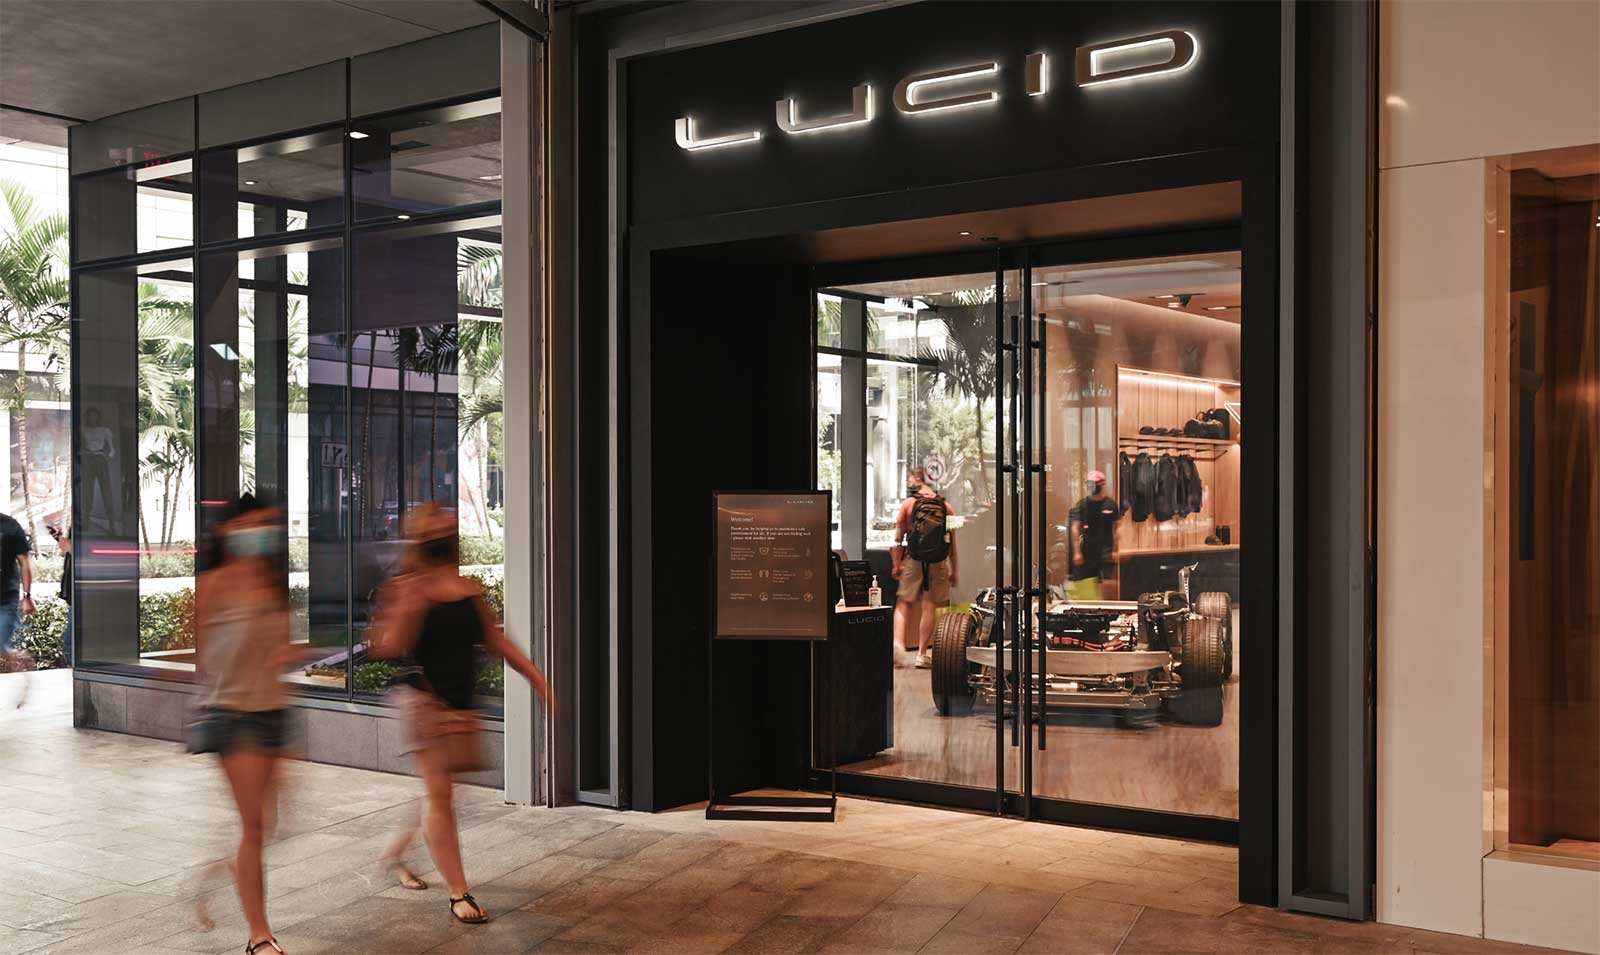 Lucid Motors at Brickell City Centre (photo credit Lucid Motors)